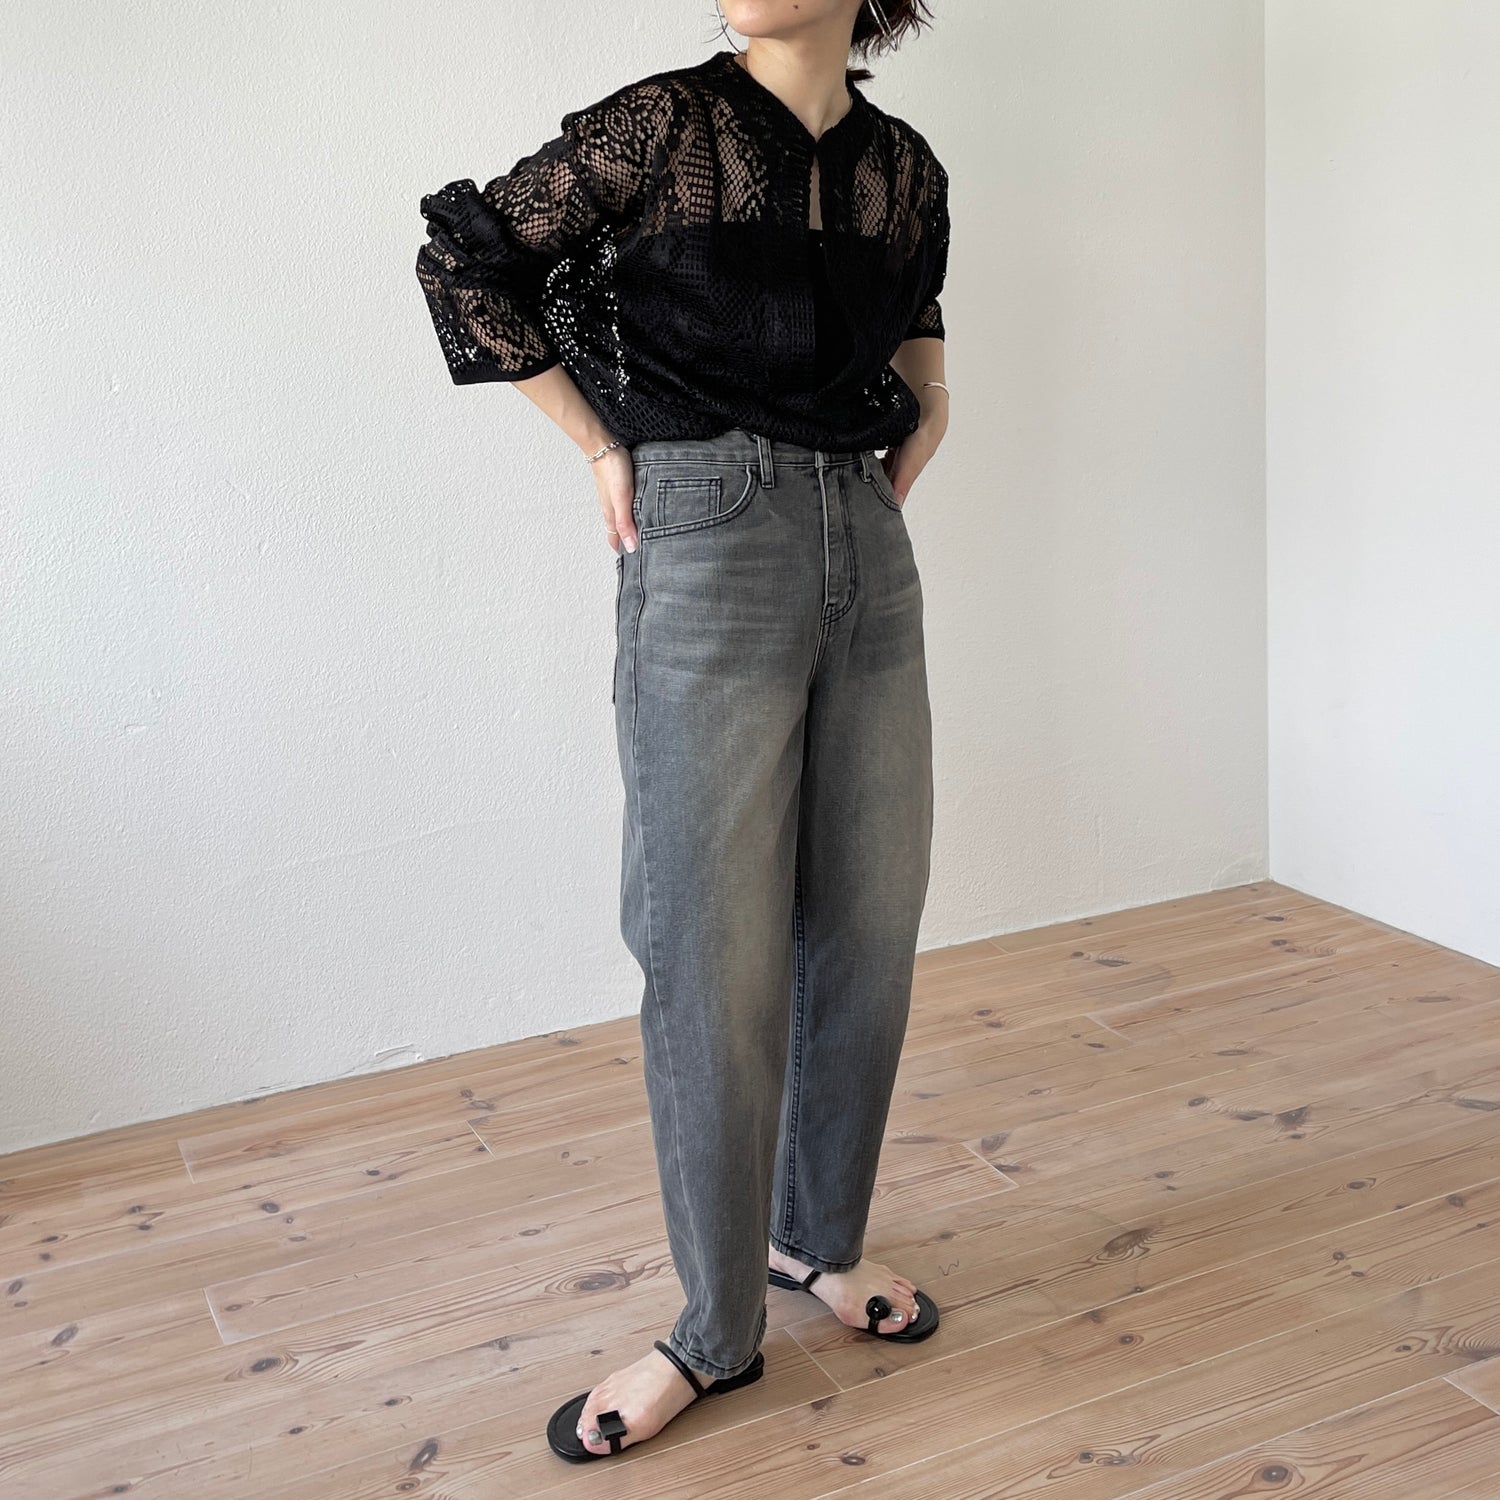 over size lace caftan blouse / black